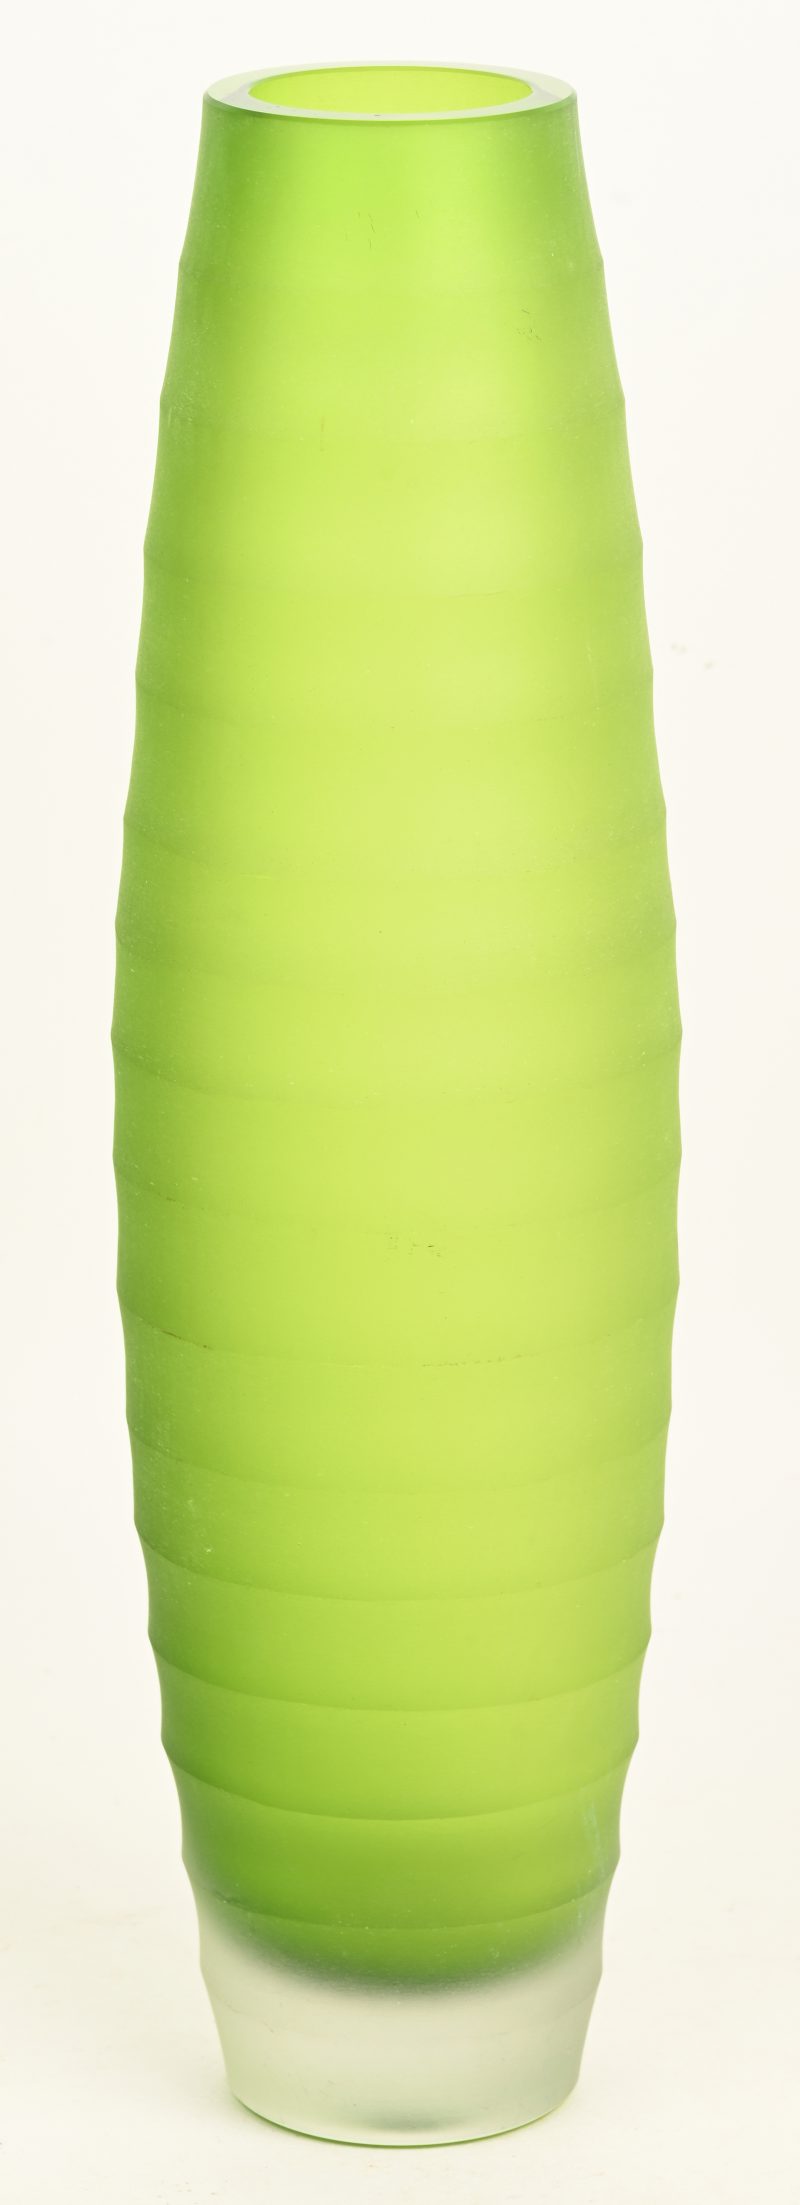 Een groene slanke glaspasta vaas.